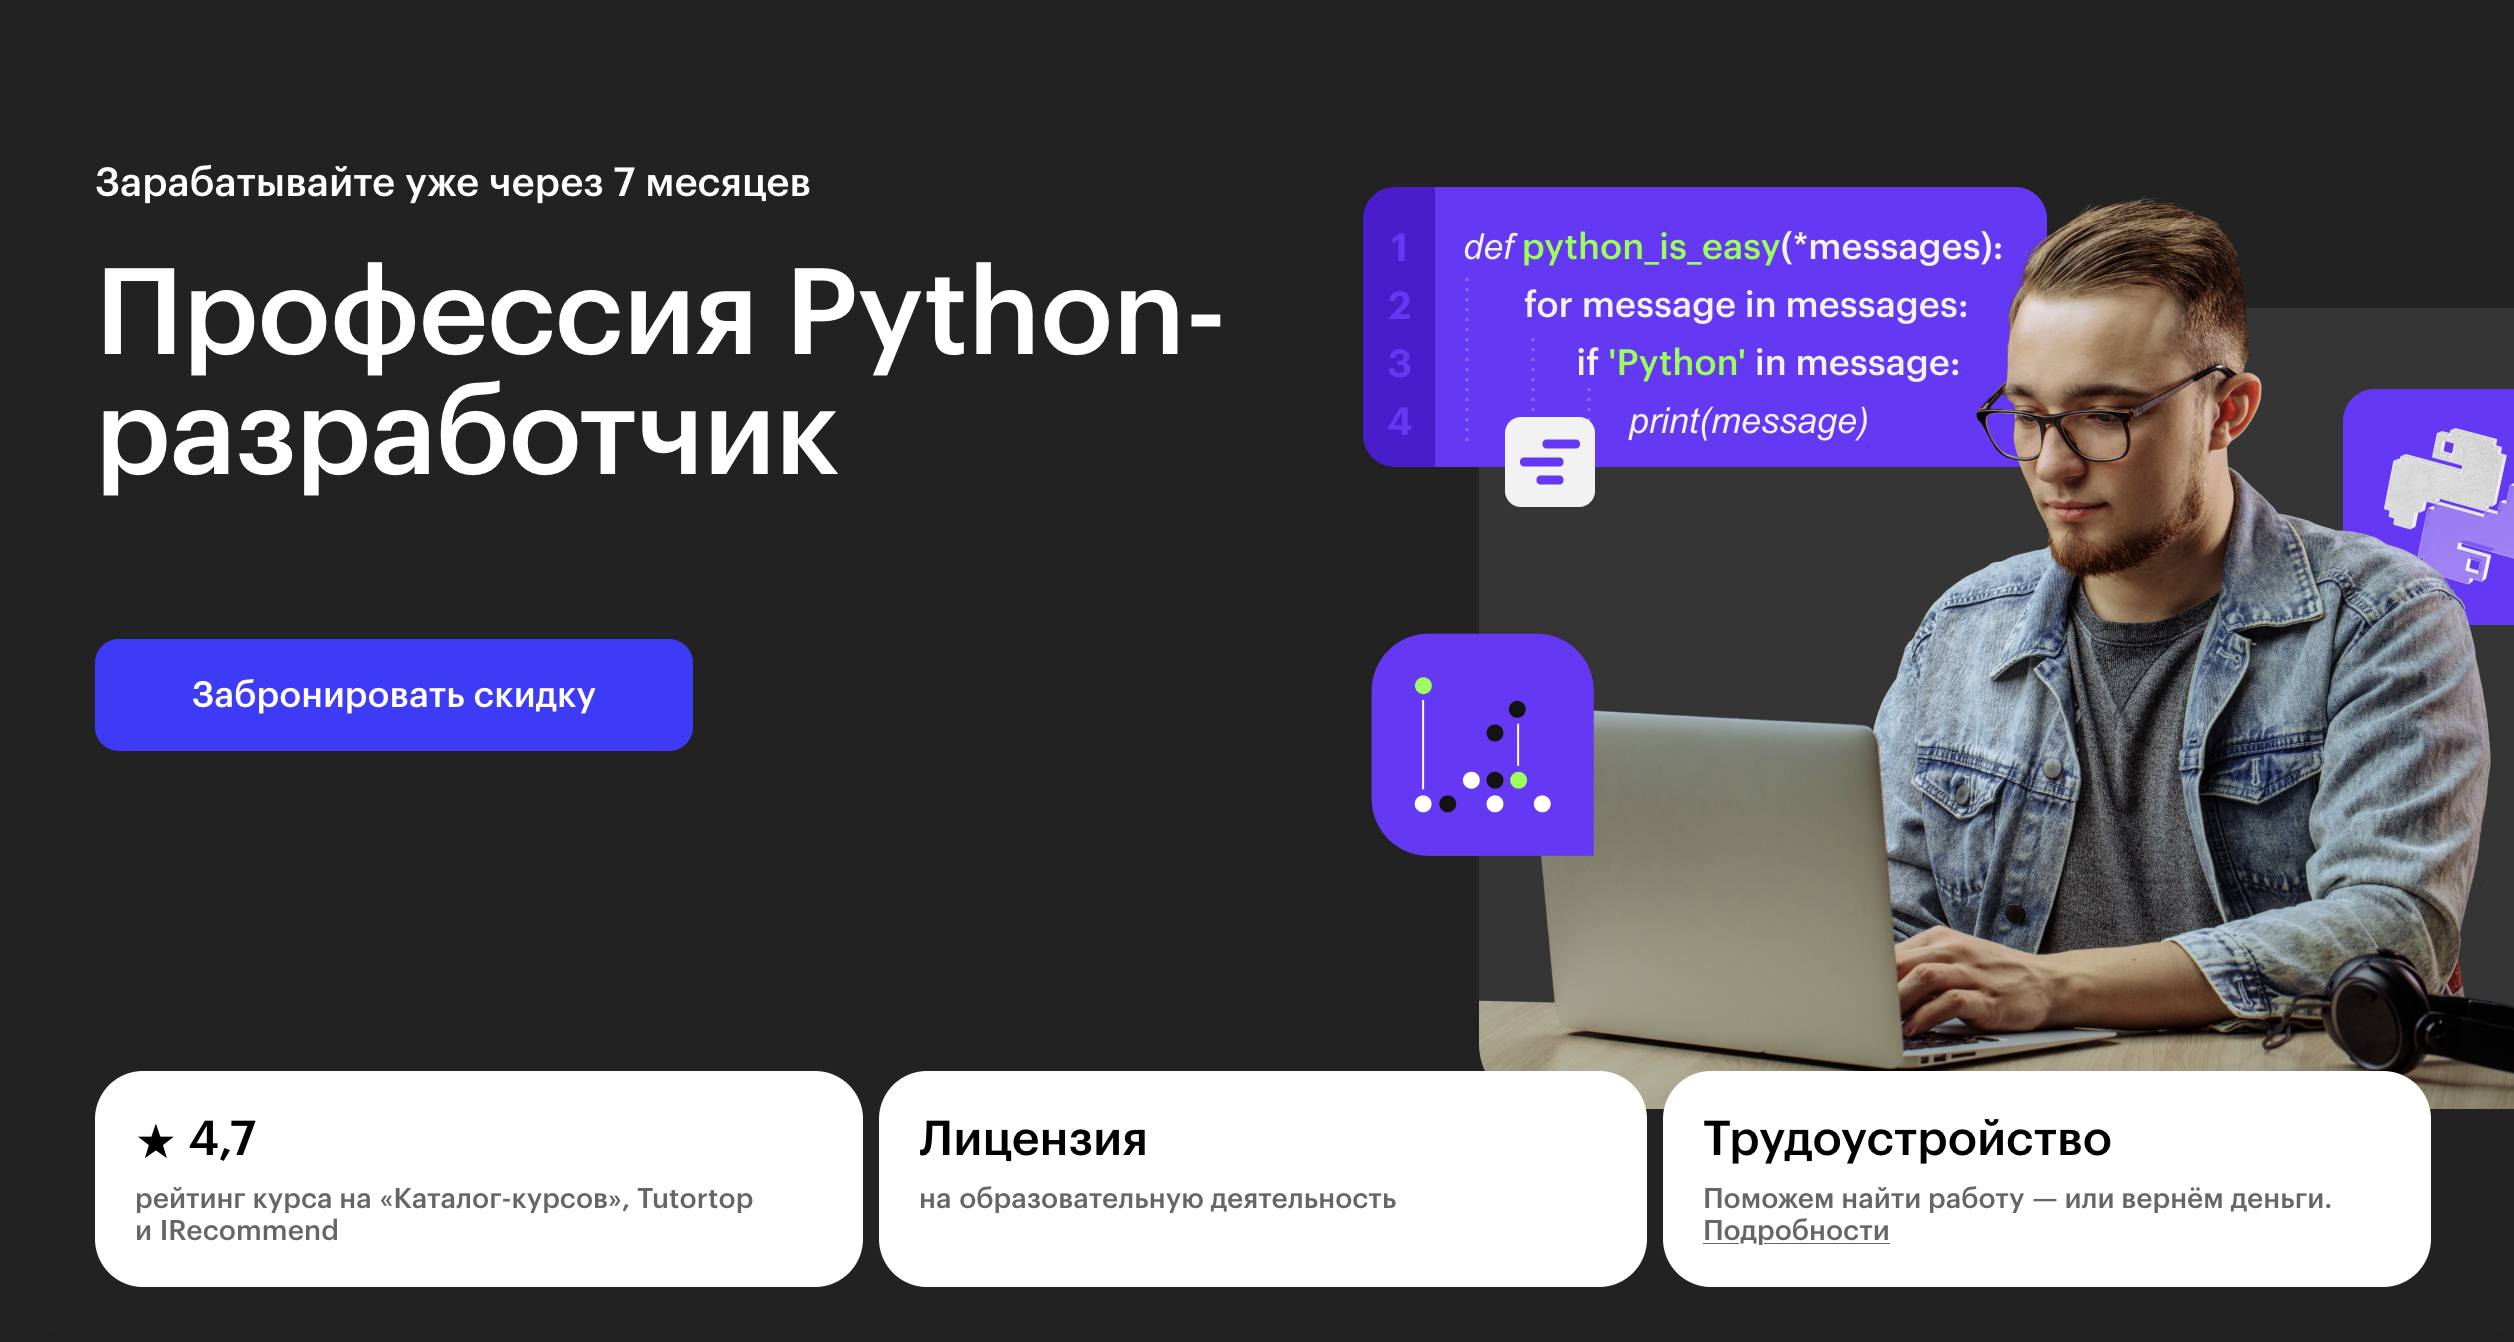 "Профессия Python-разработчик" от Skillbox